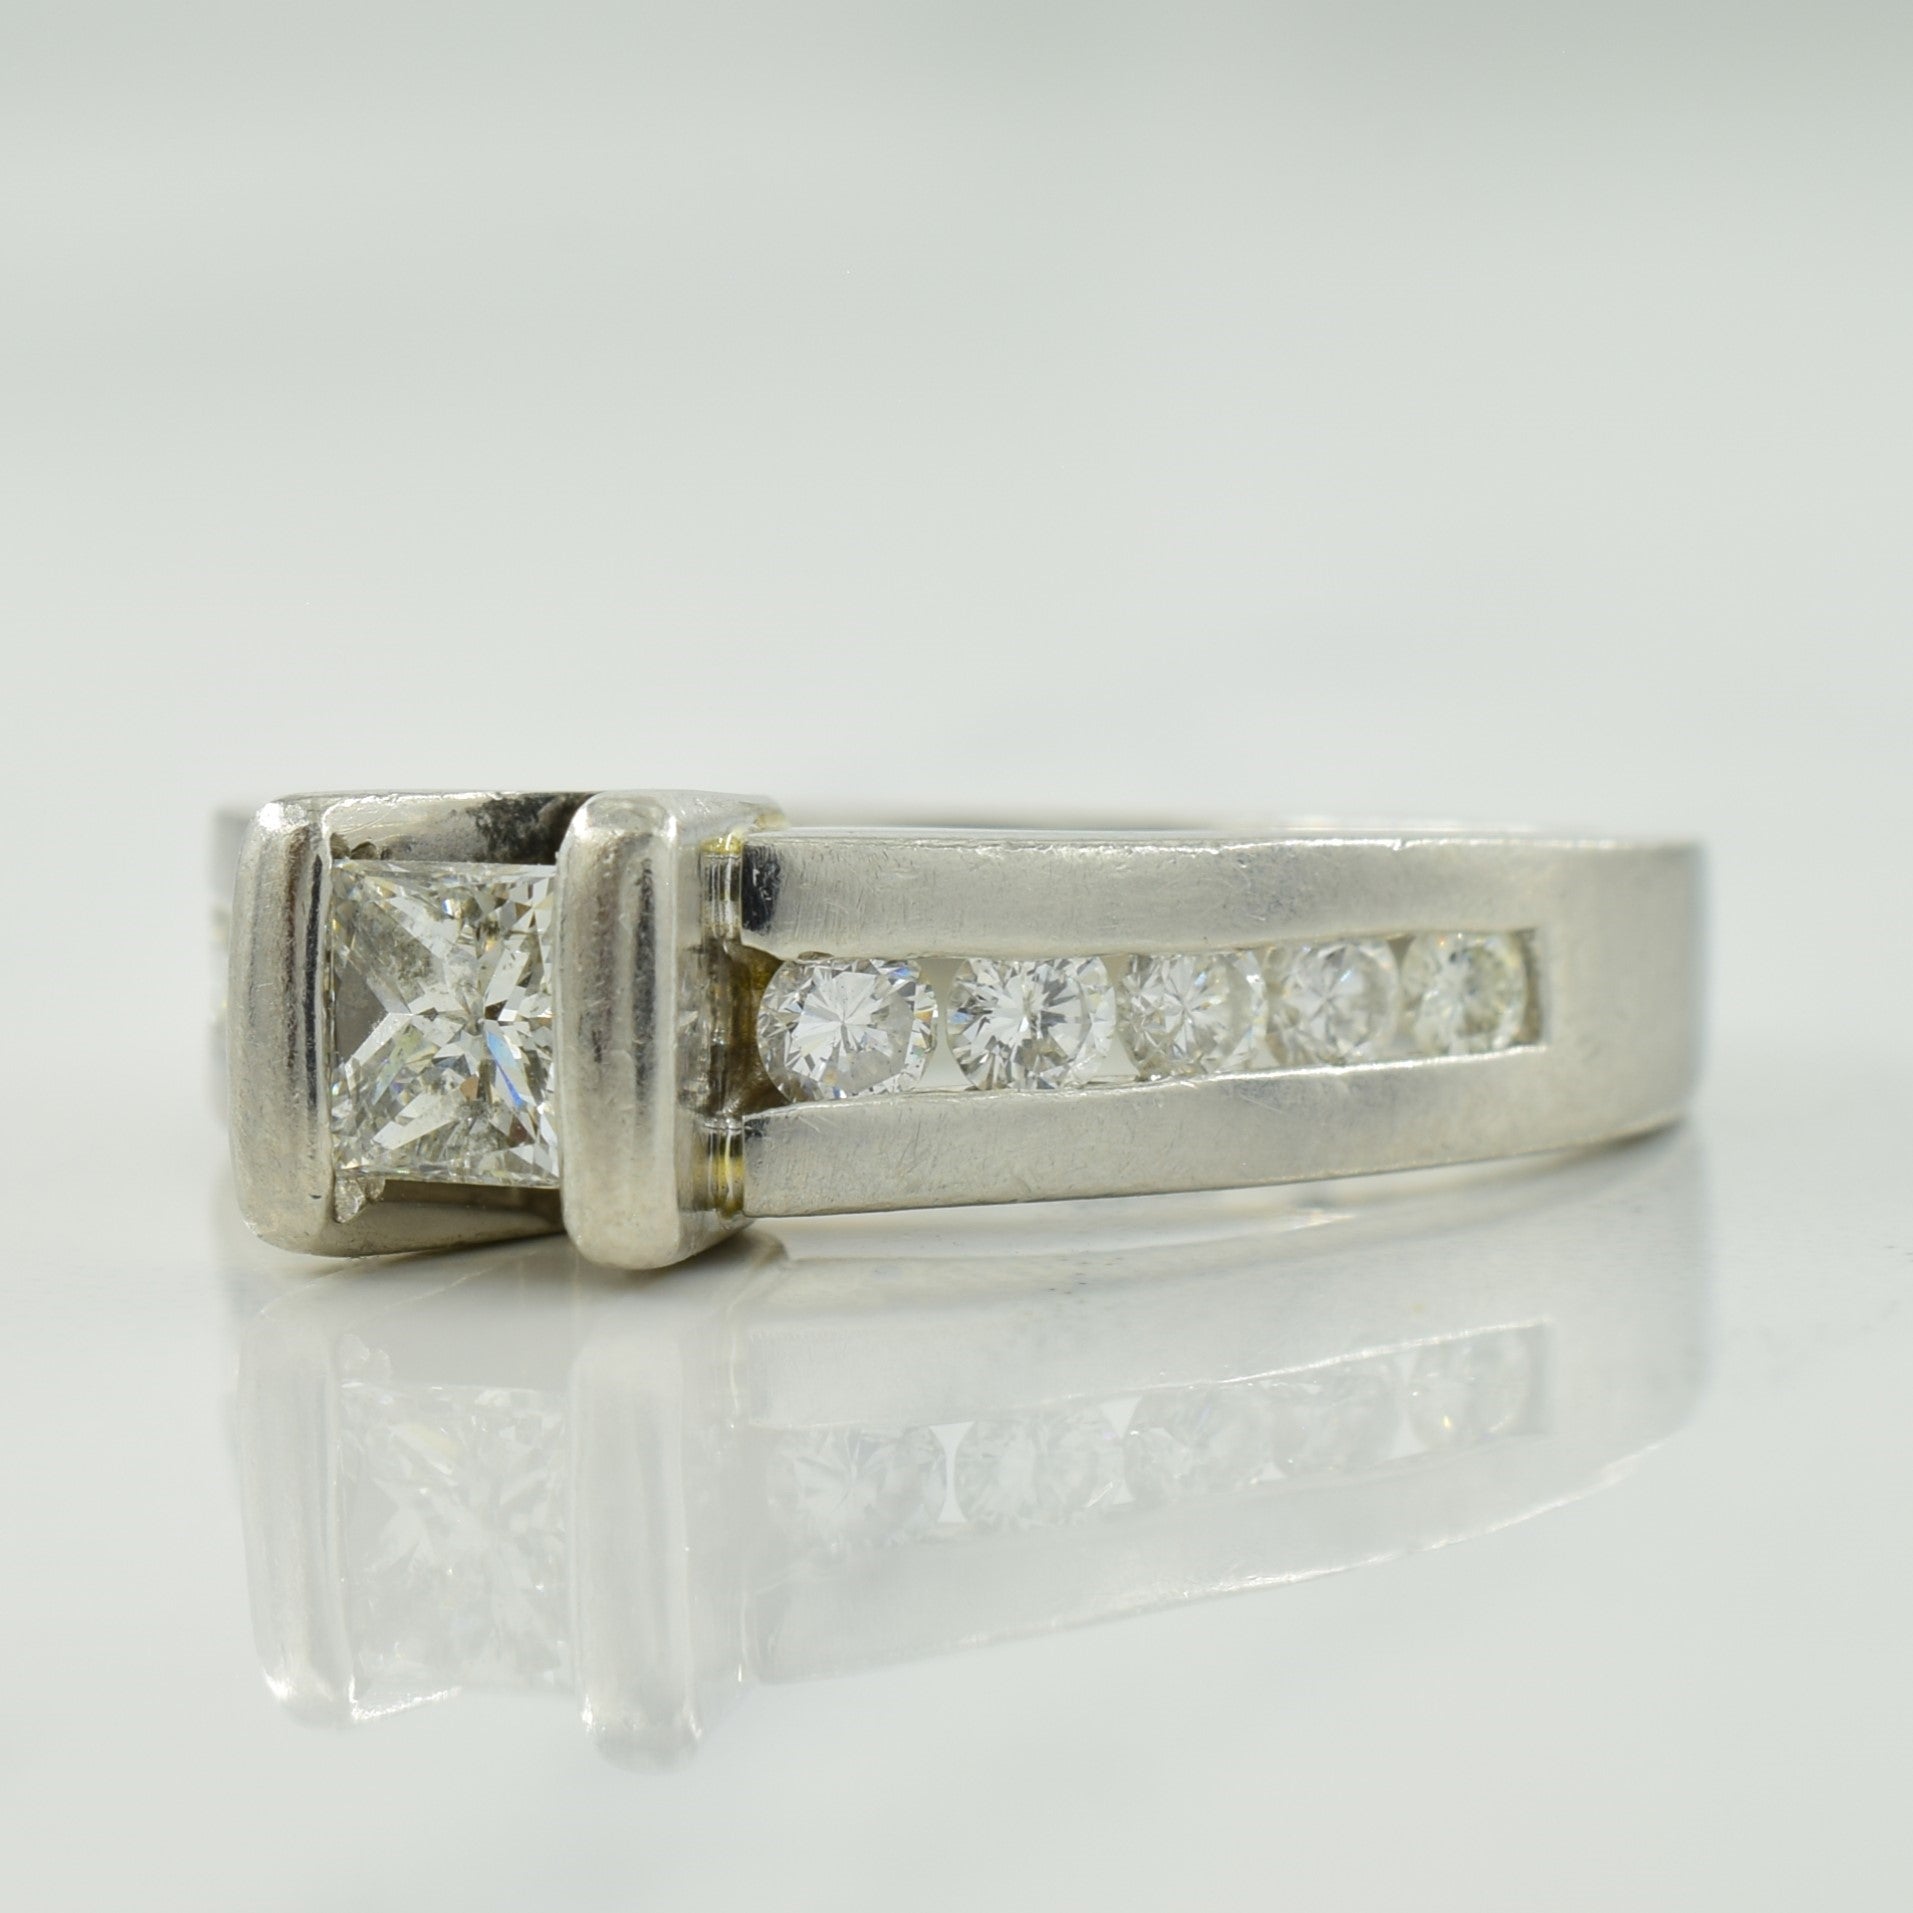 Platinum Diamond Cathedral Ring | 0.77ctw | SZ 7 |